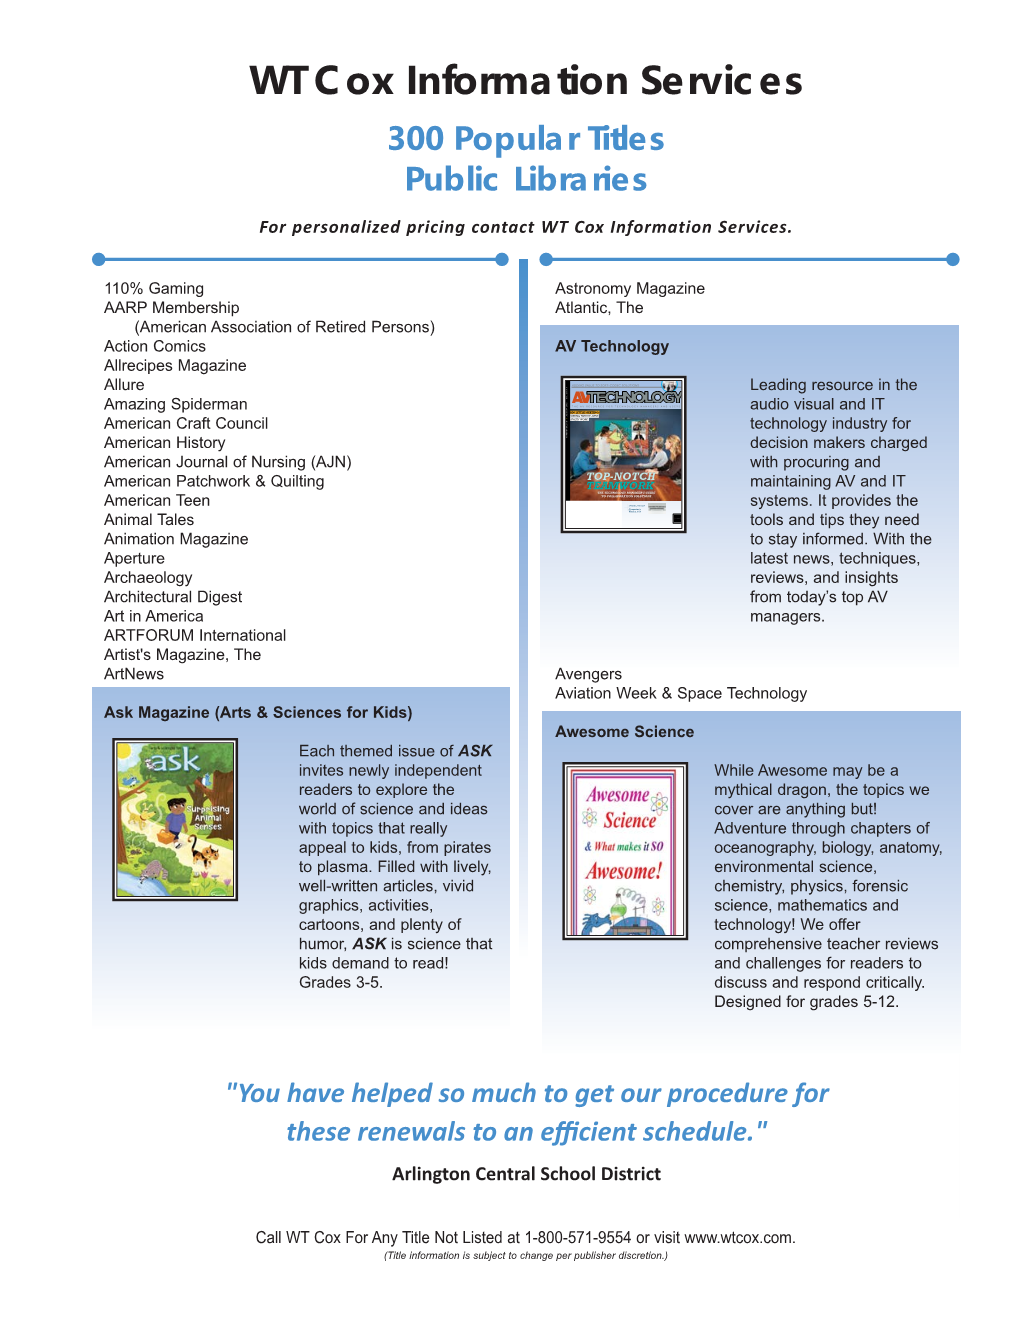 WT Cox Information Services 300 Popular Titles Public Libraries